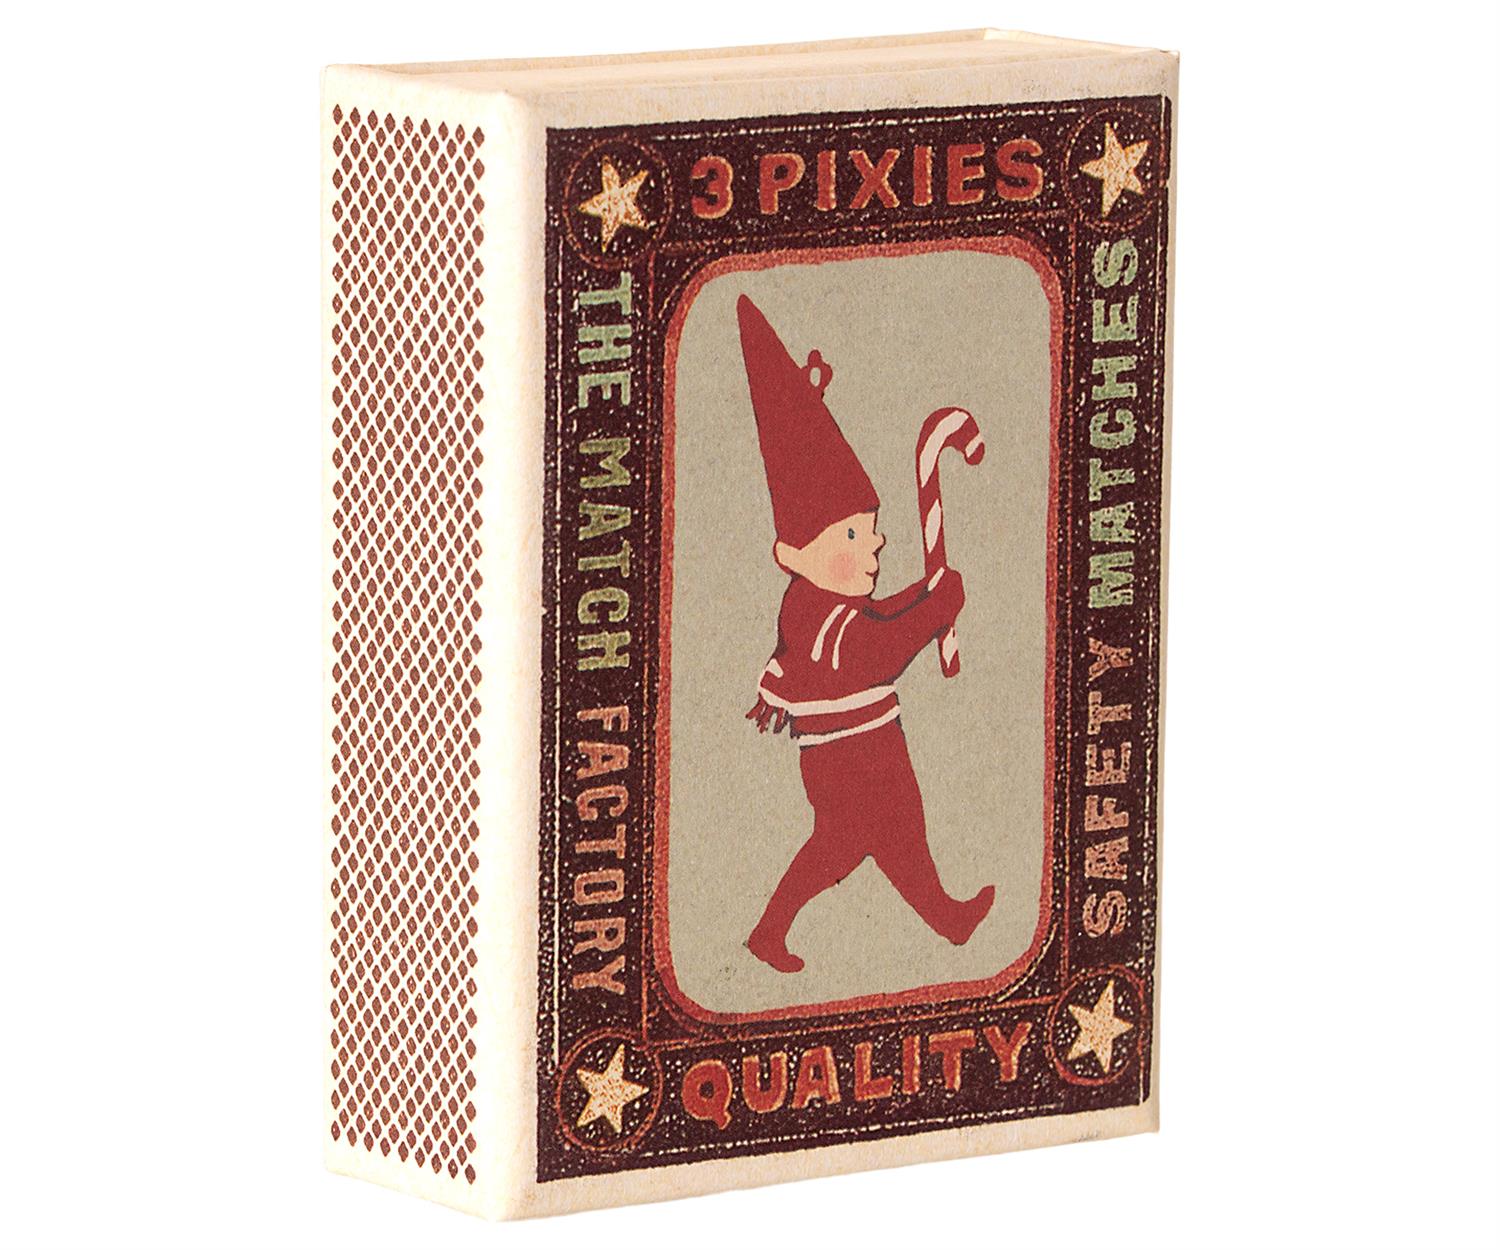 MAILEG Metal ornaments in matchbox, 3 Pixies Multi